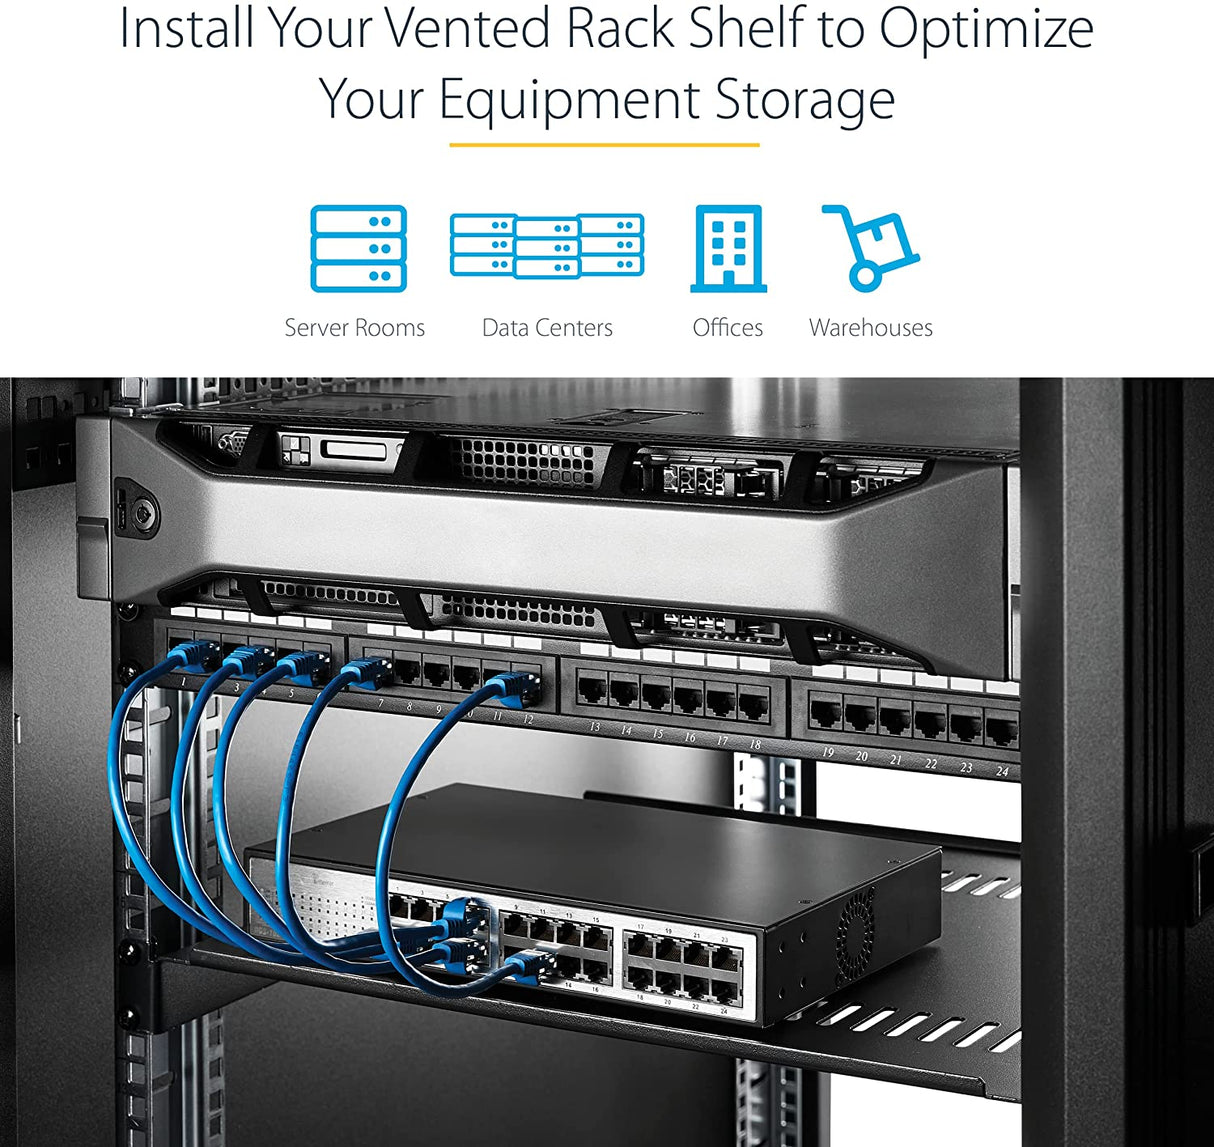 Middle atlantic 1U Server Rack Shelf - Universal Vented Rack Mount Cantilever Tray for 19" Network Equipment Rack &amp; Cabinet - Heavy Duty Steel – Weight Capacity 44lb/20kg - 12" Deep Shelf, Black (SHELF-1U-12-FIXED-V) 1U 12" Depth